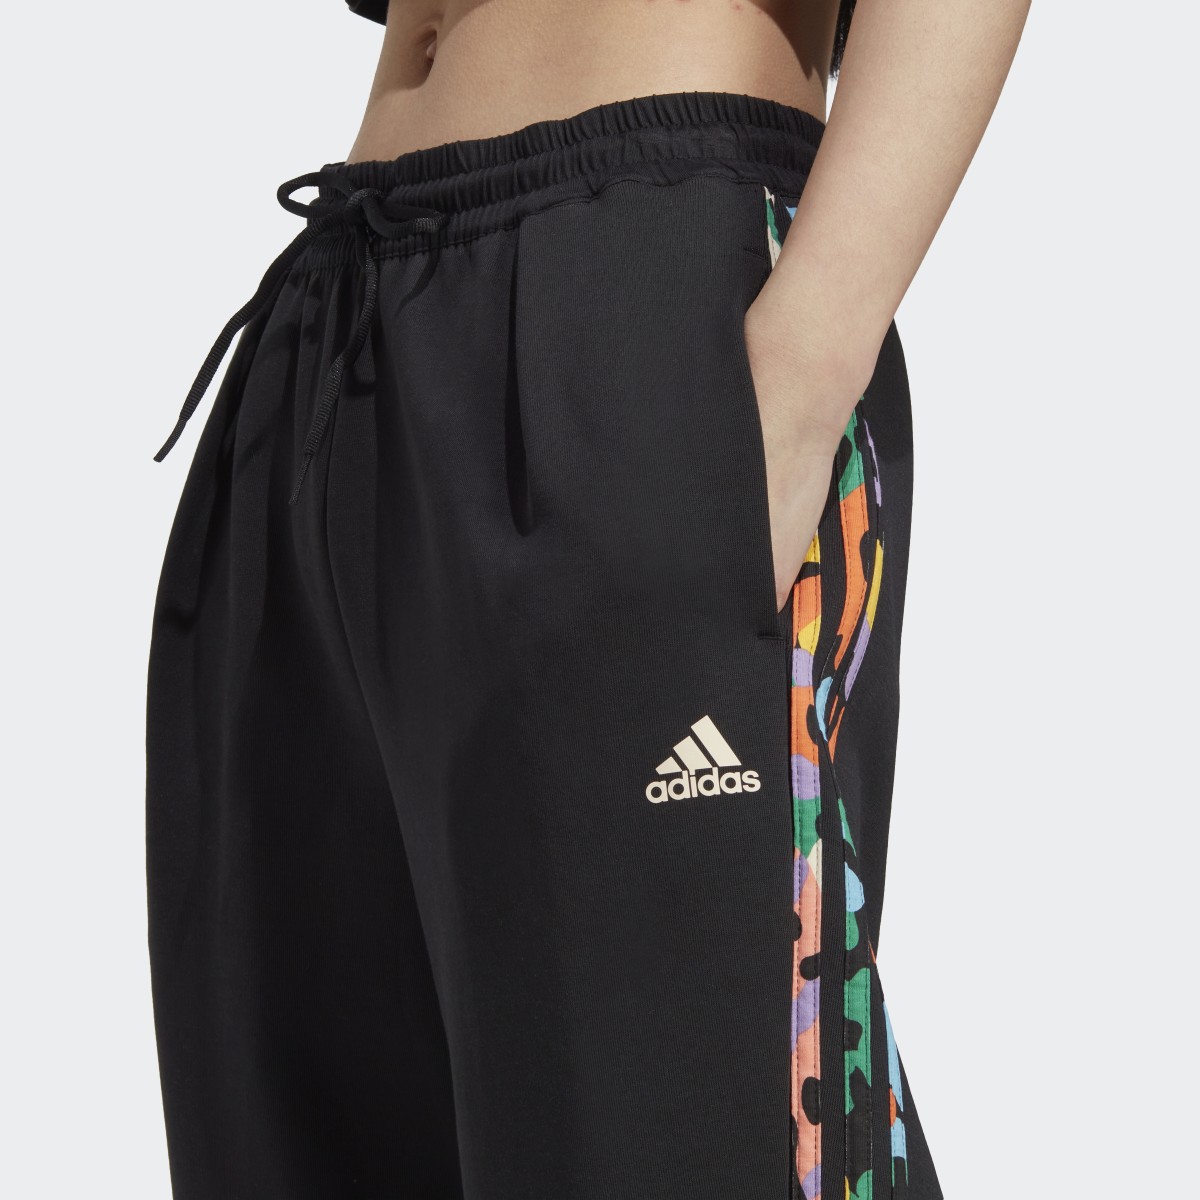 Adidas Graphic Pants. 5